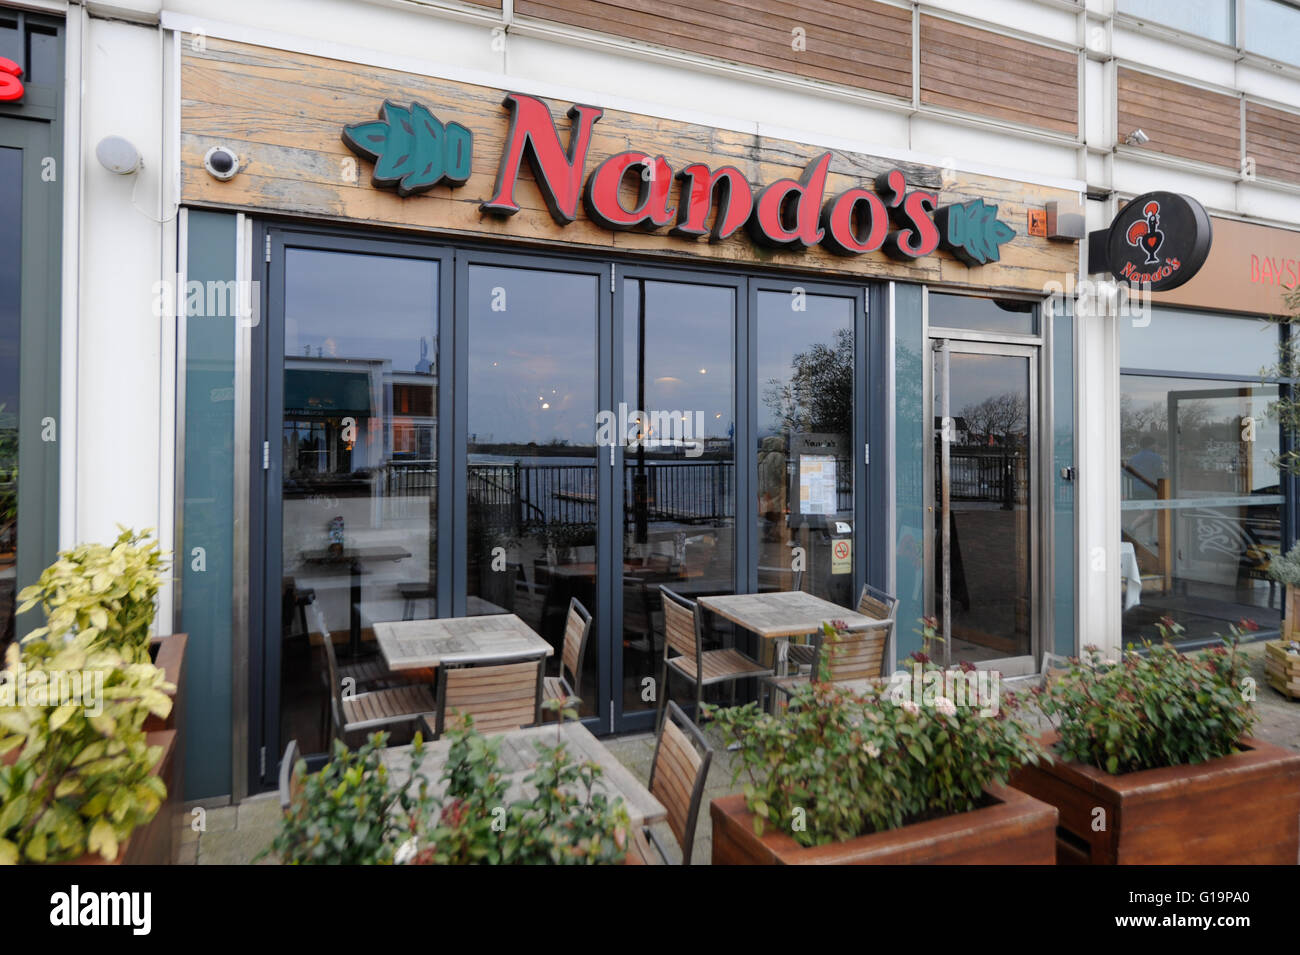 Nando's Restaurant exterior sign in Cardiff Bay - United Kingdom Stock Photo